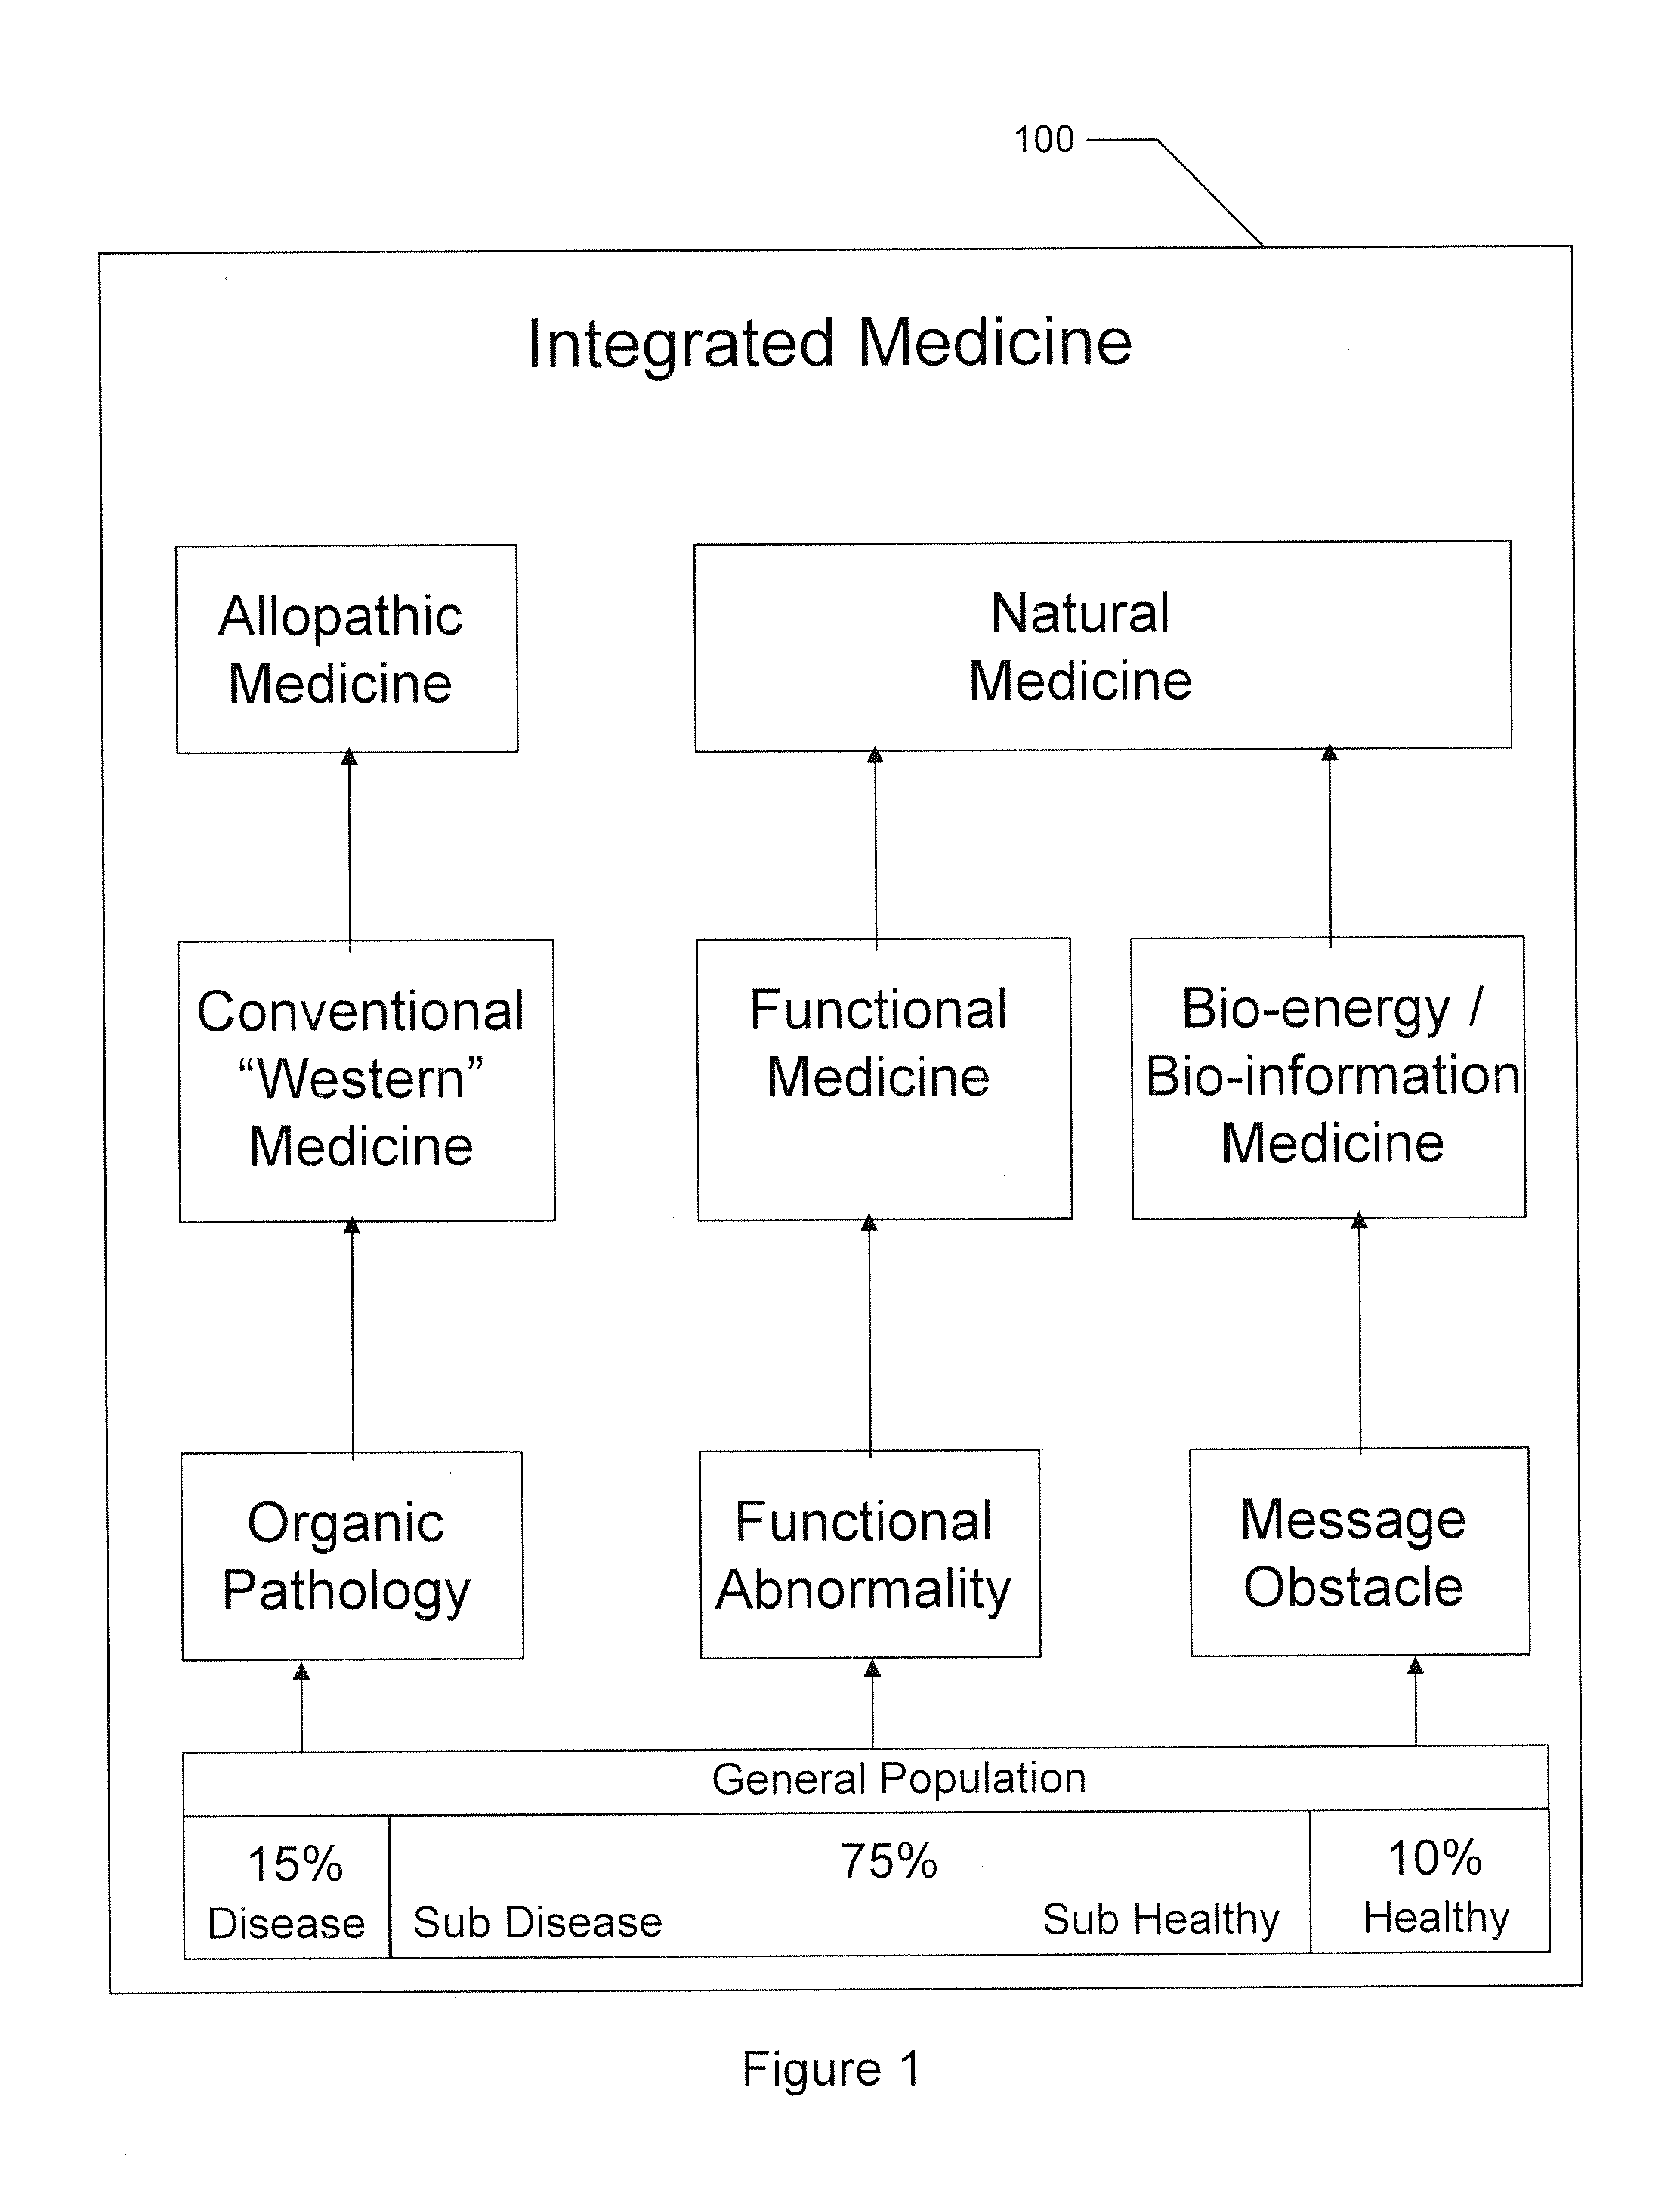 Integrated medicine method for health promotion